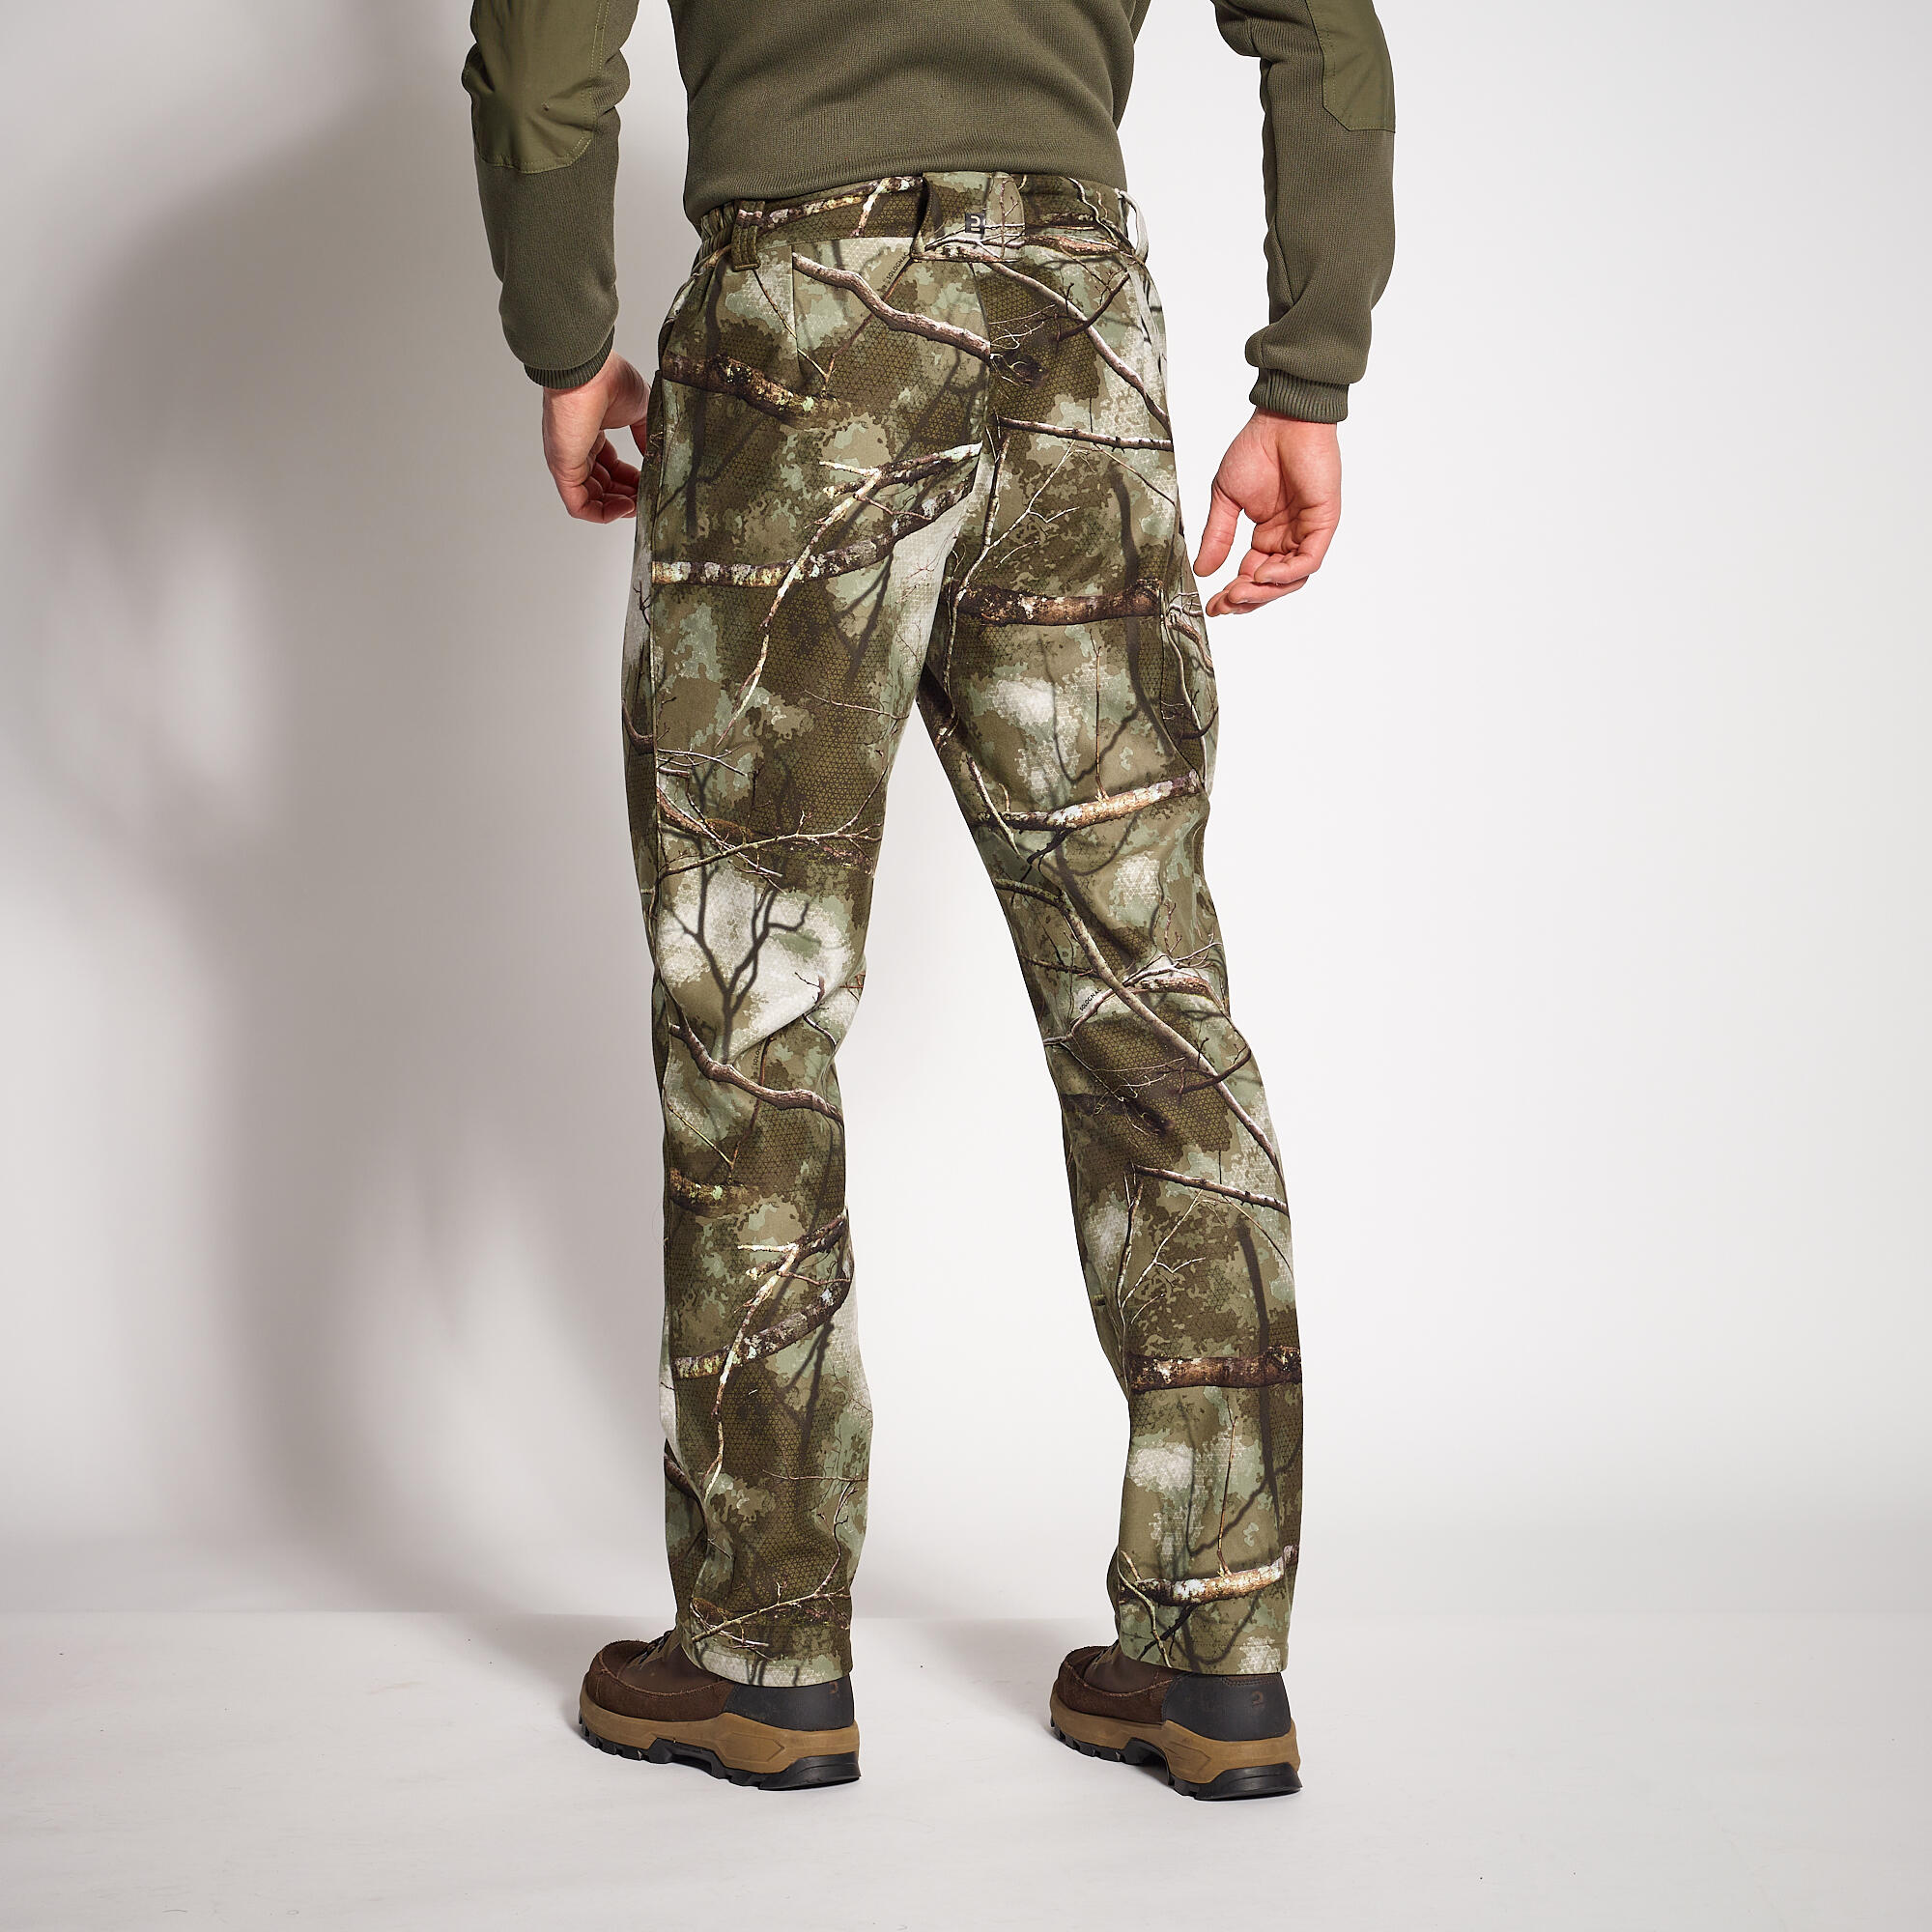 Hunting Pants,yeti/bear Camouflage Pants,hunting Clothes For Men 2021 - Buy  China Wholesale Hunting Pants $5